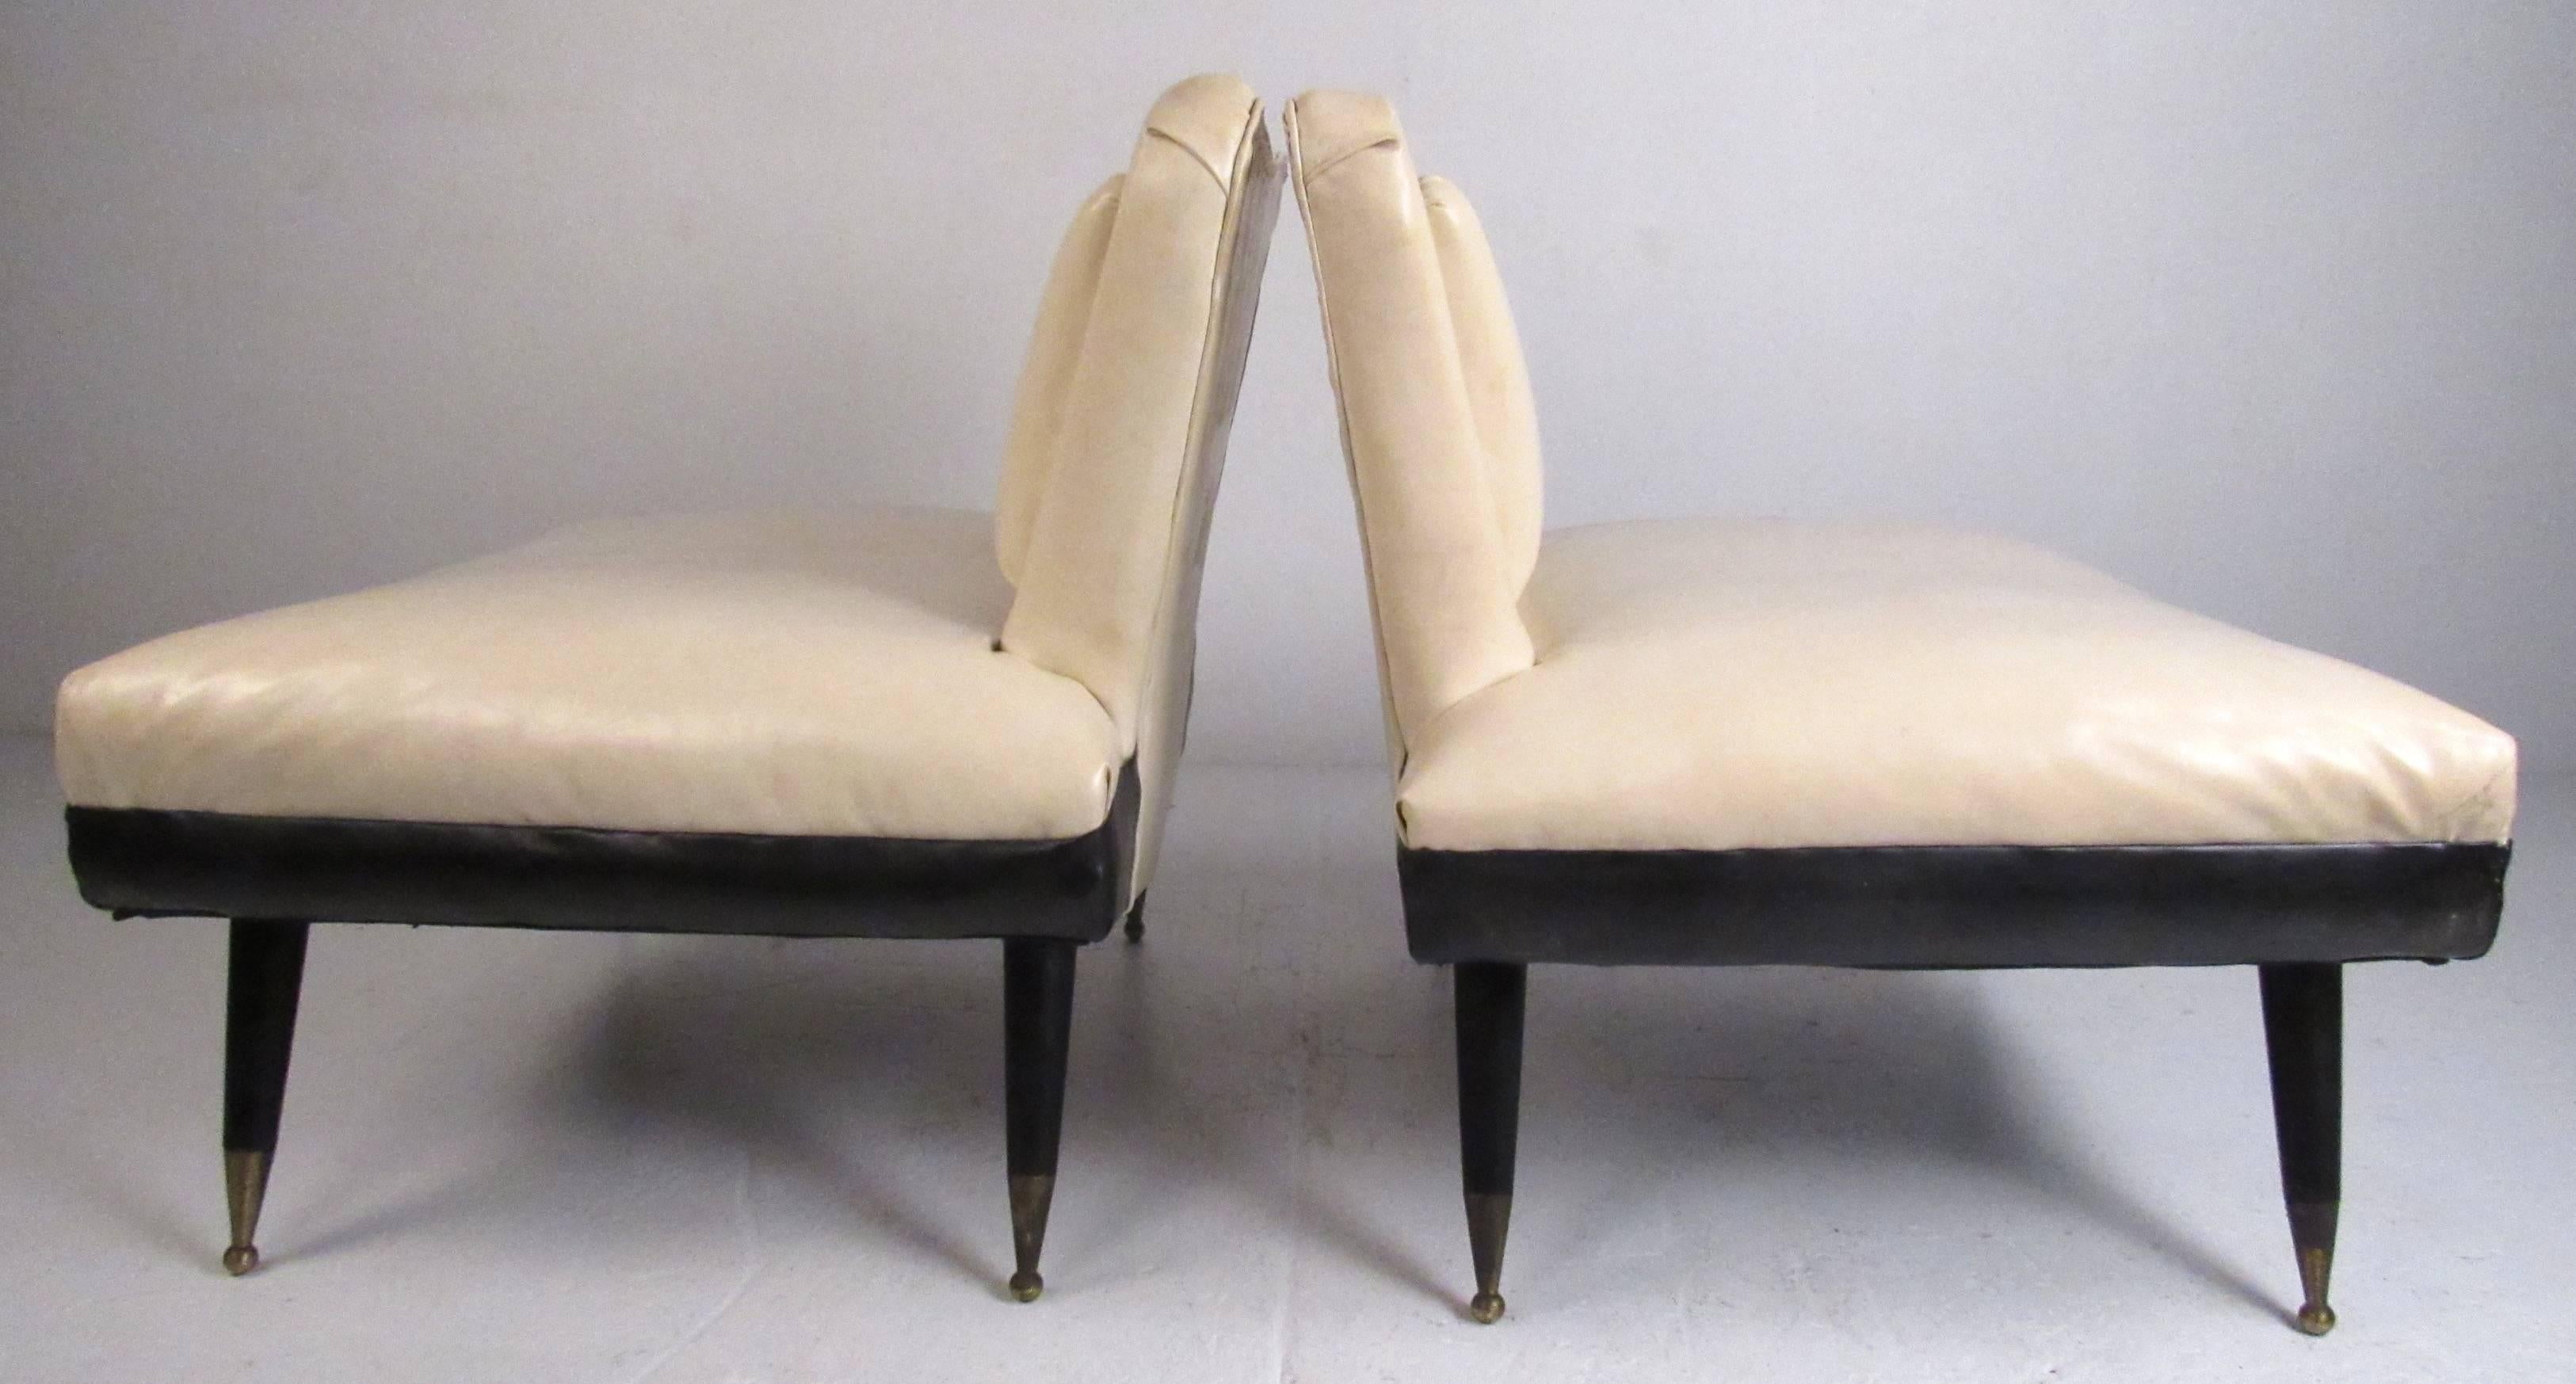 Upholstery Pair of Art Deco Slipper Chairs